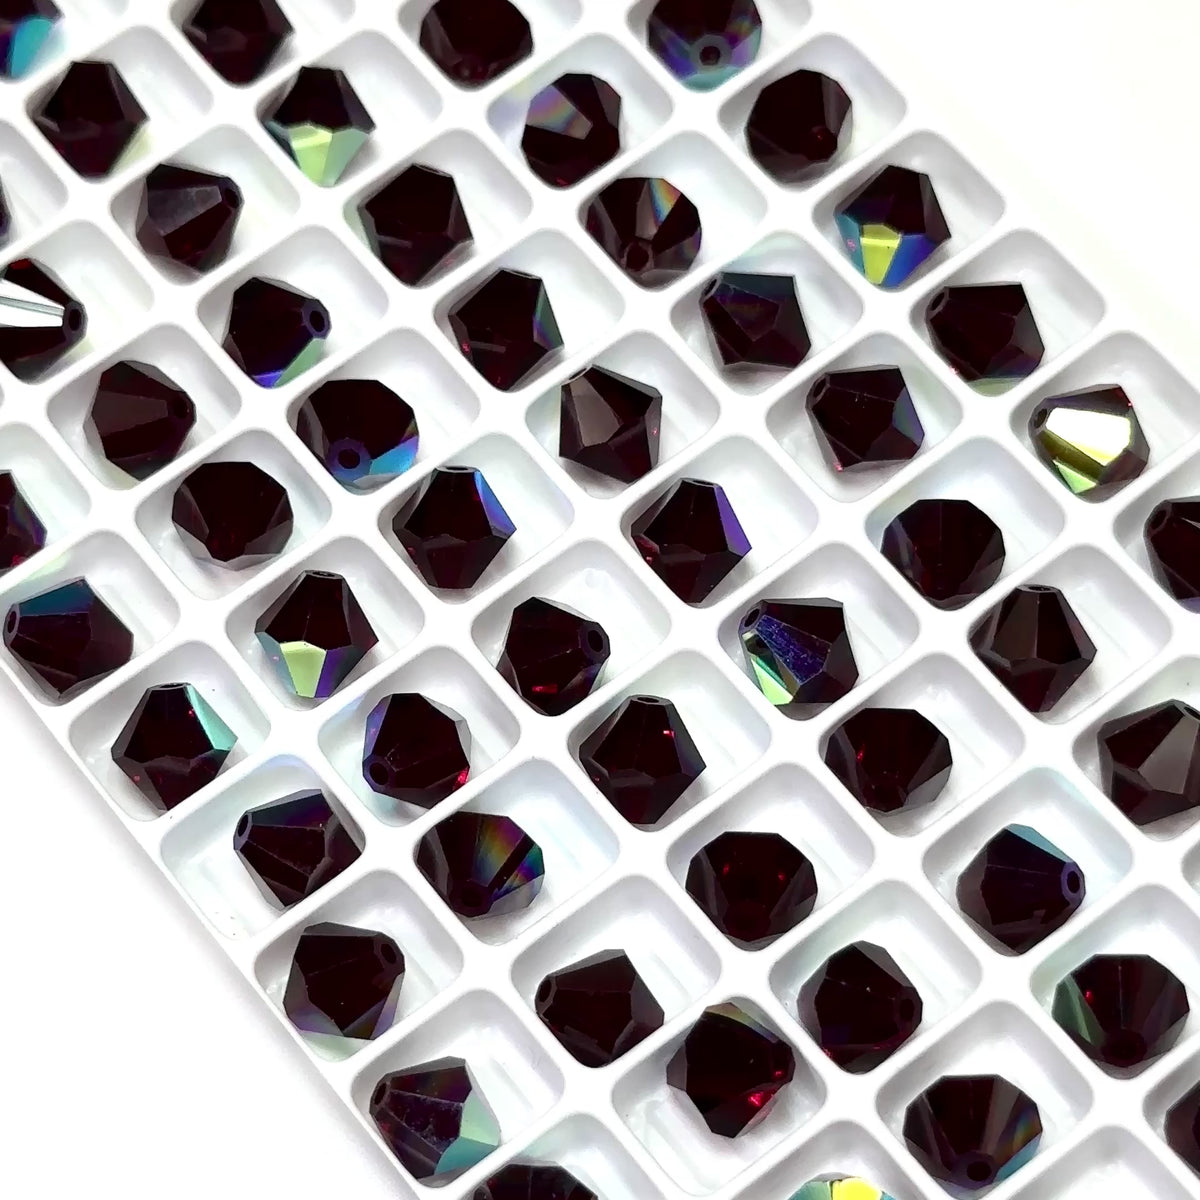 Czech Glass 3-Cut Round Window Beads (Soccer Ball Bead) Art. 151-19501 -  Crystals and Beads for Friends